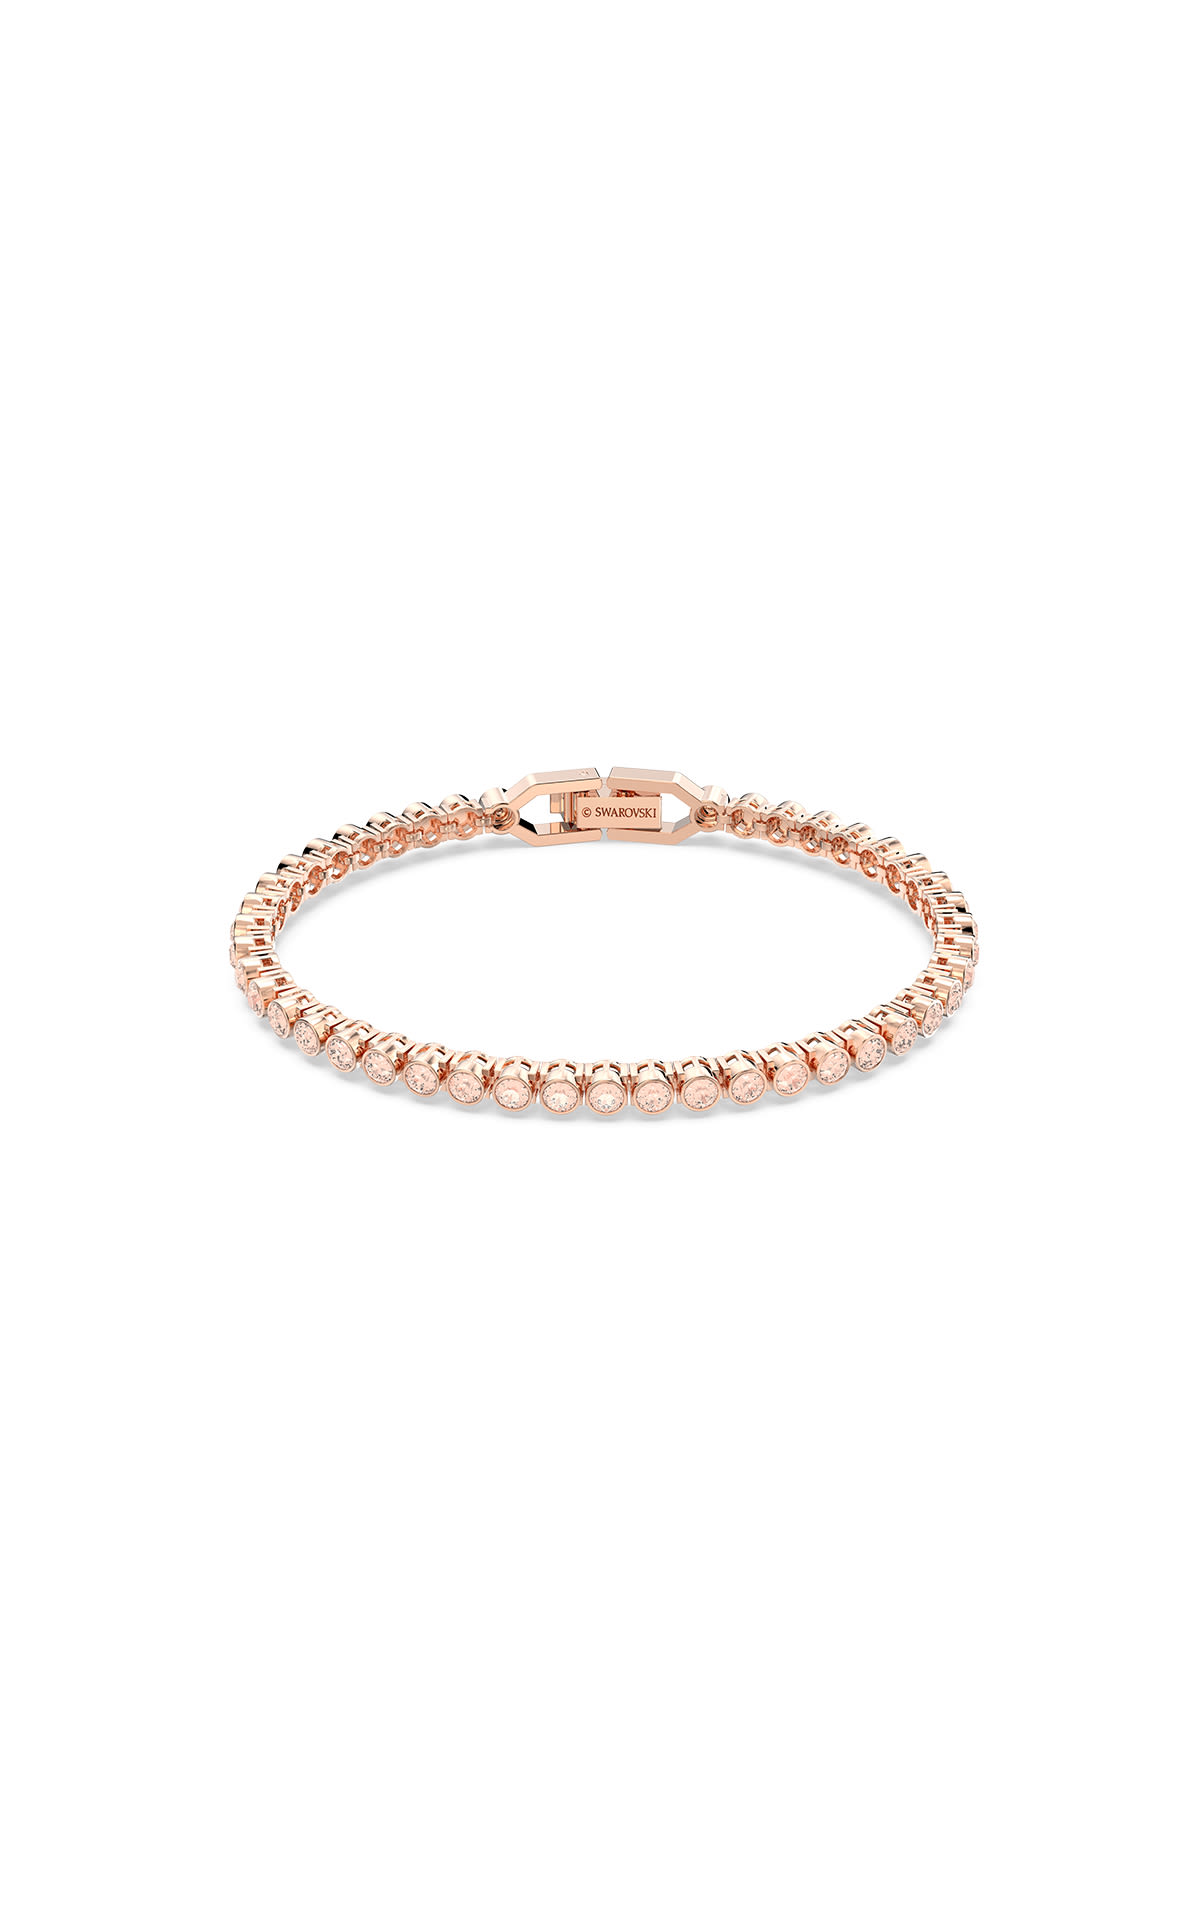 Rose gold bracelet with diamonds Swarovski